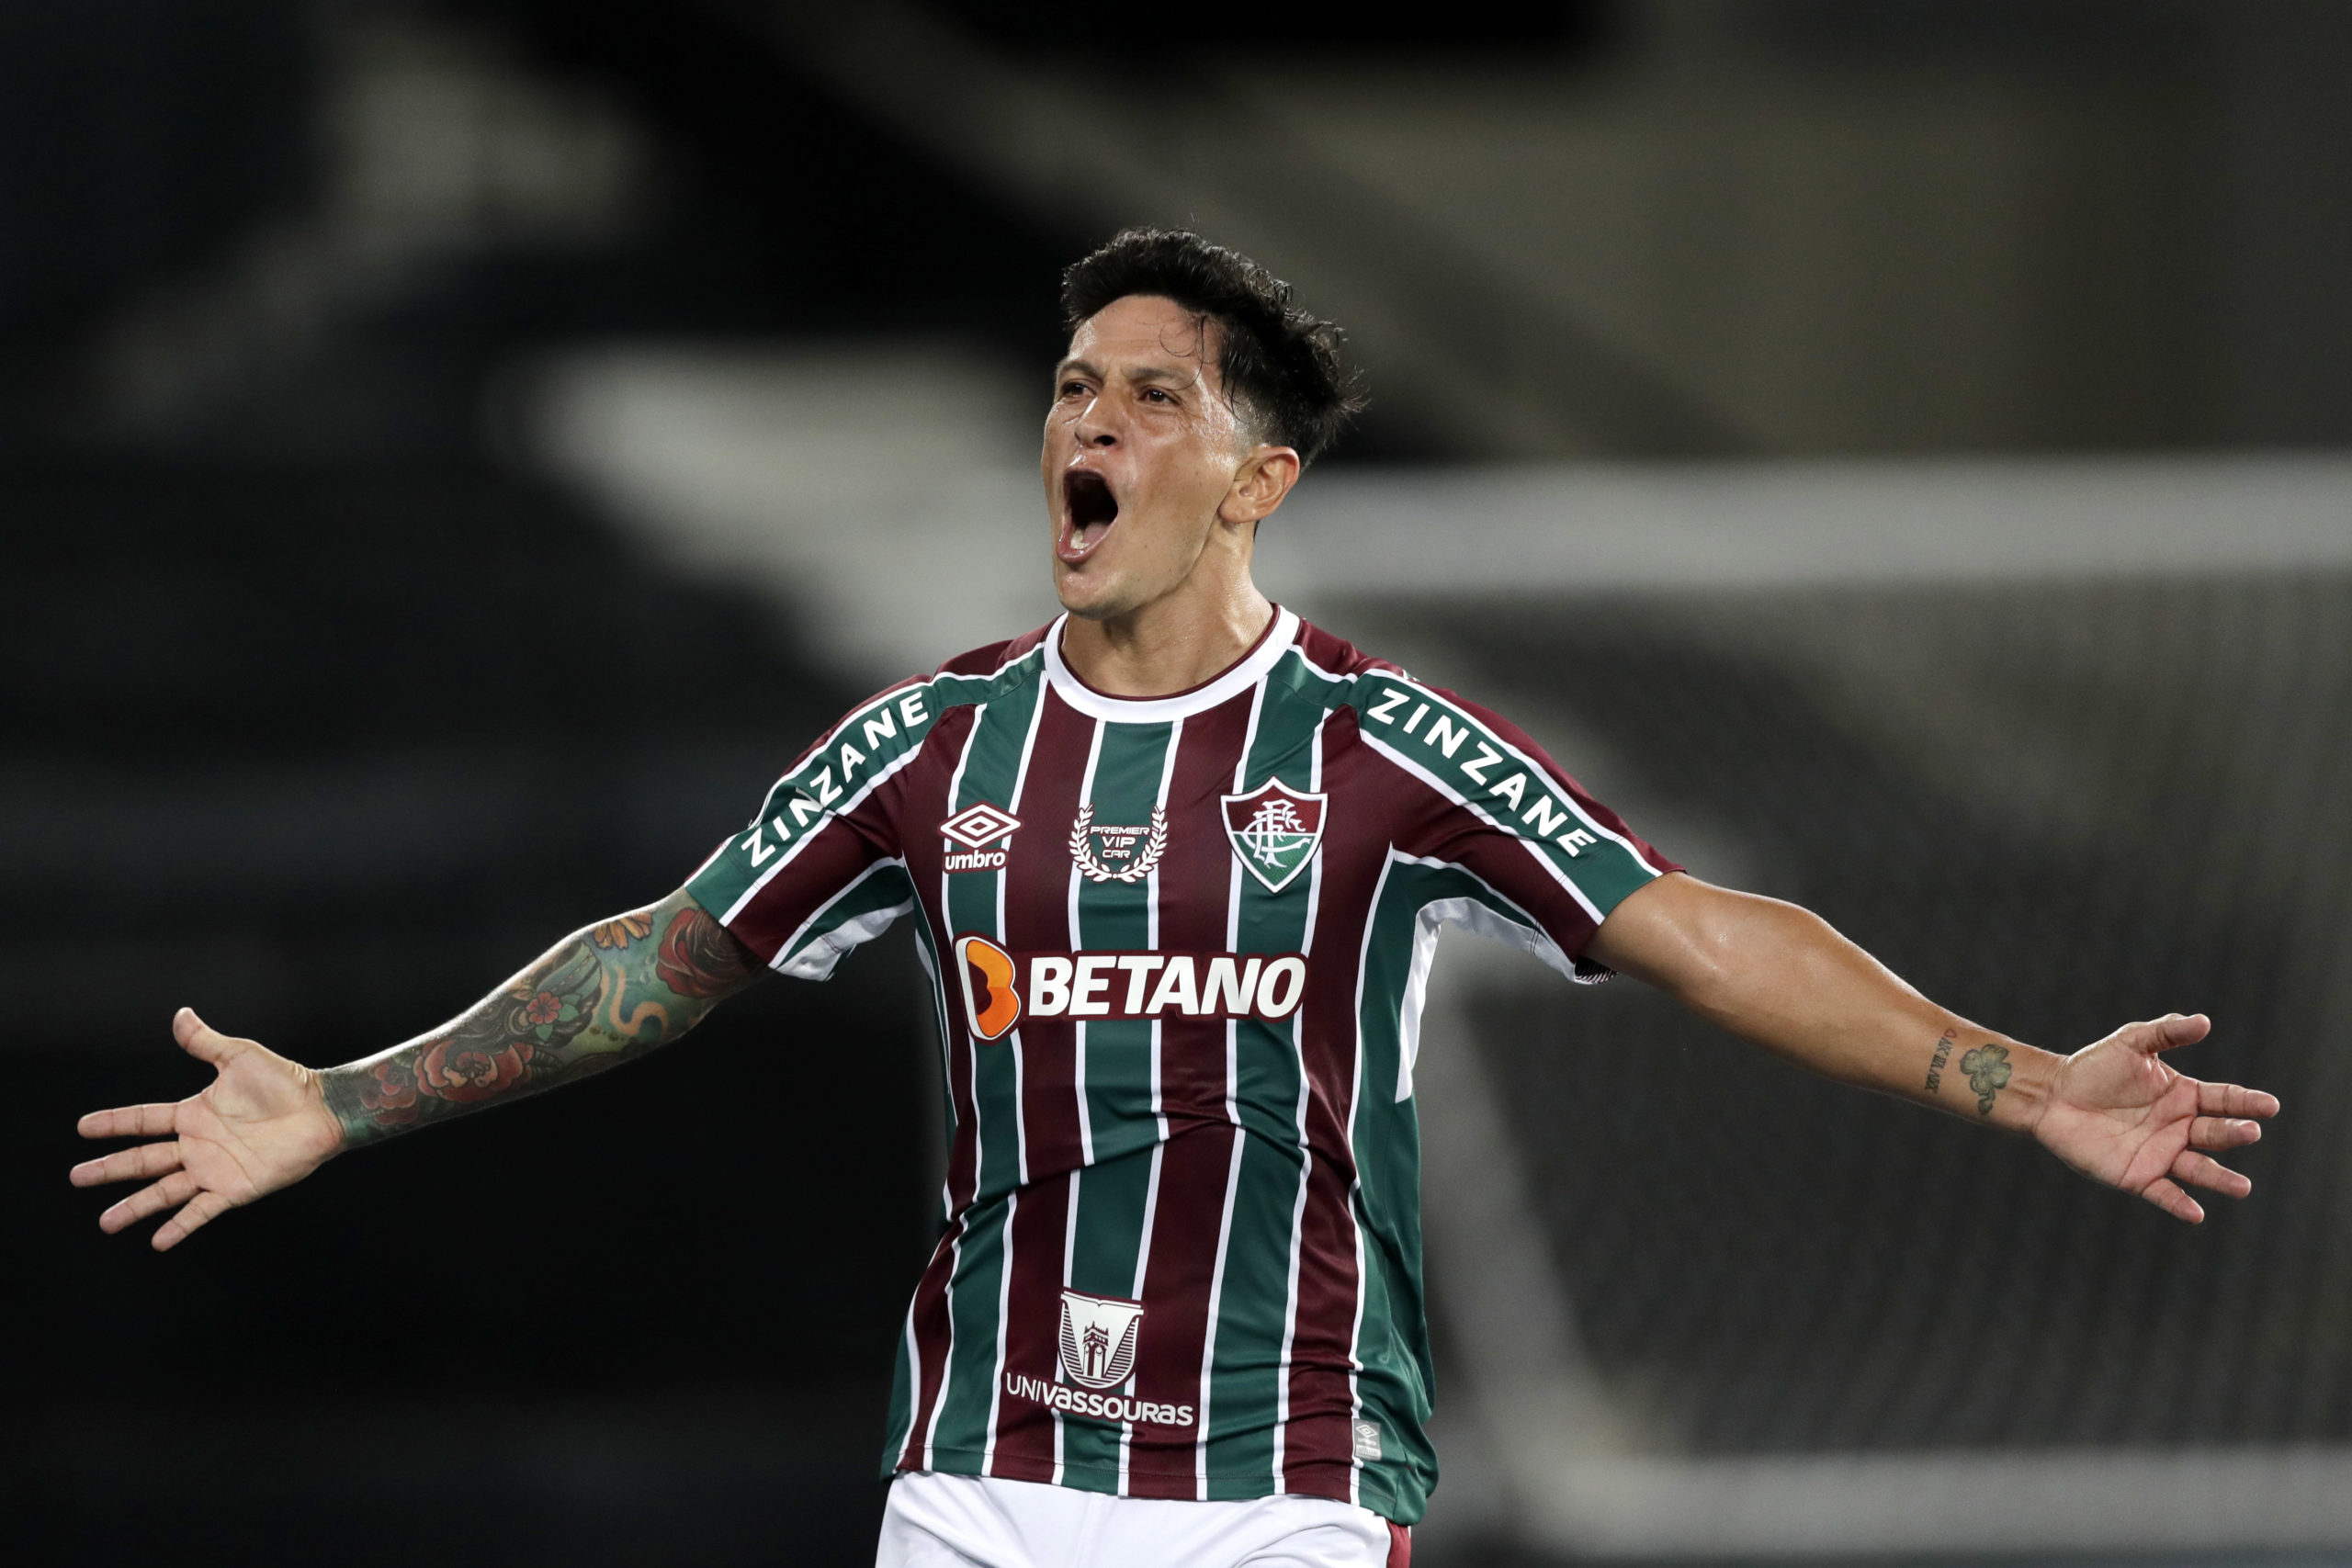 Fluminense agora conta com o patrocínio da Betano